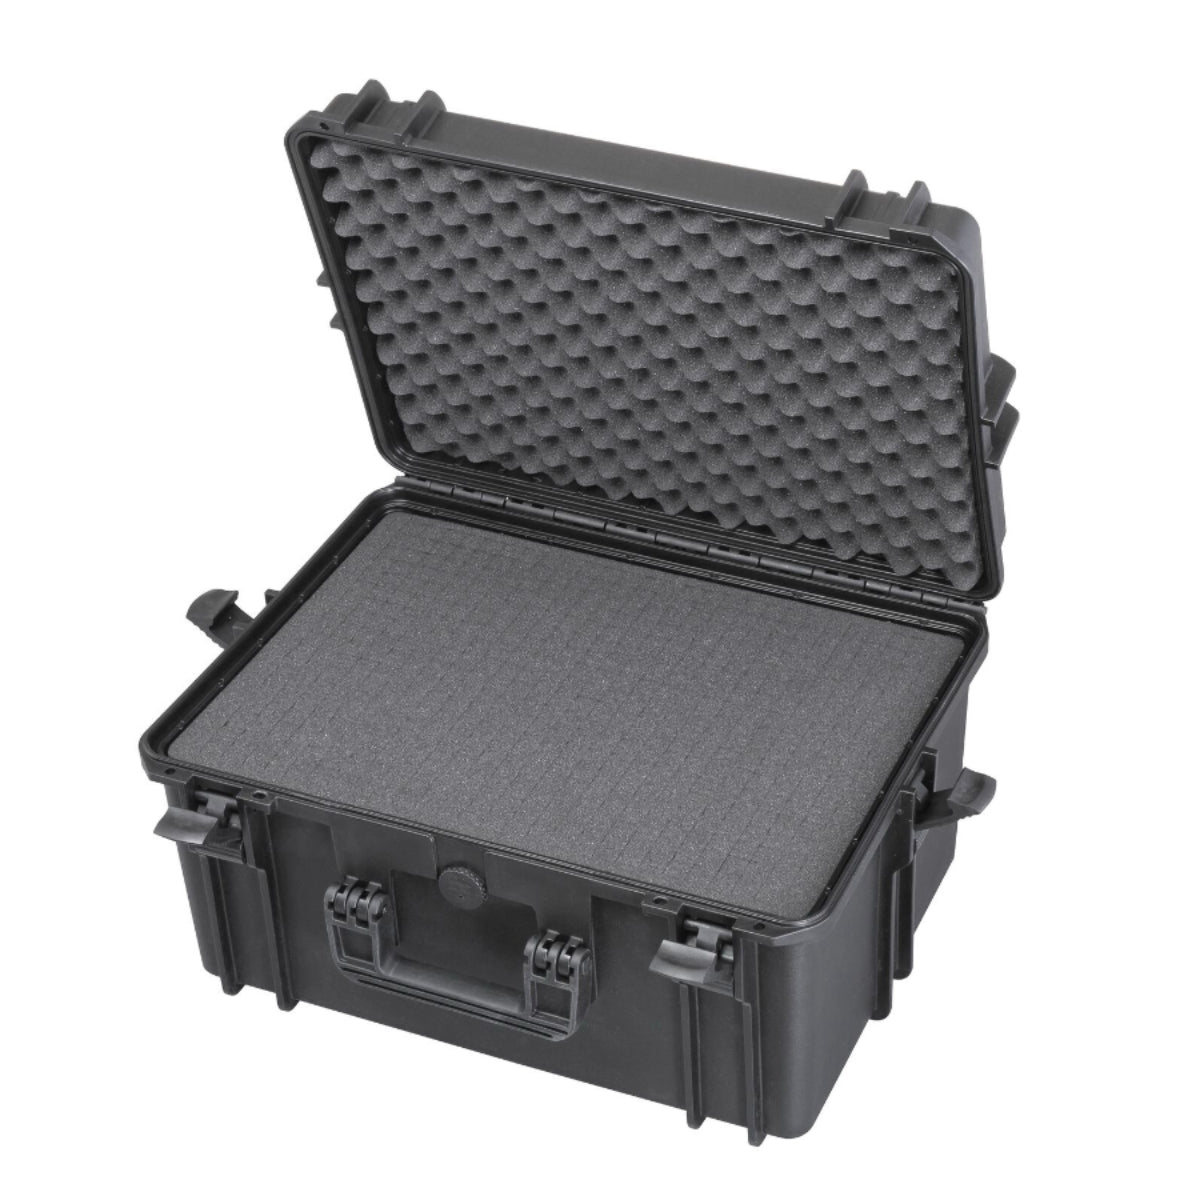 SP PRO 505H280S Black Carry Case, Cubed Foam, ID: L500xW350xH280mm